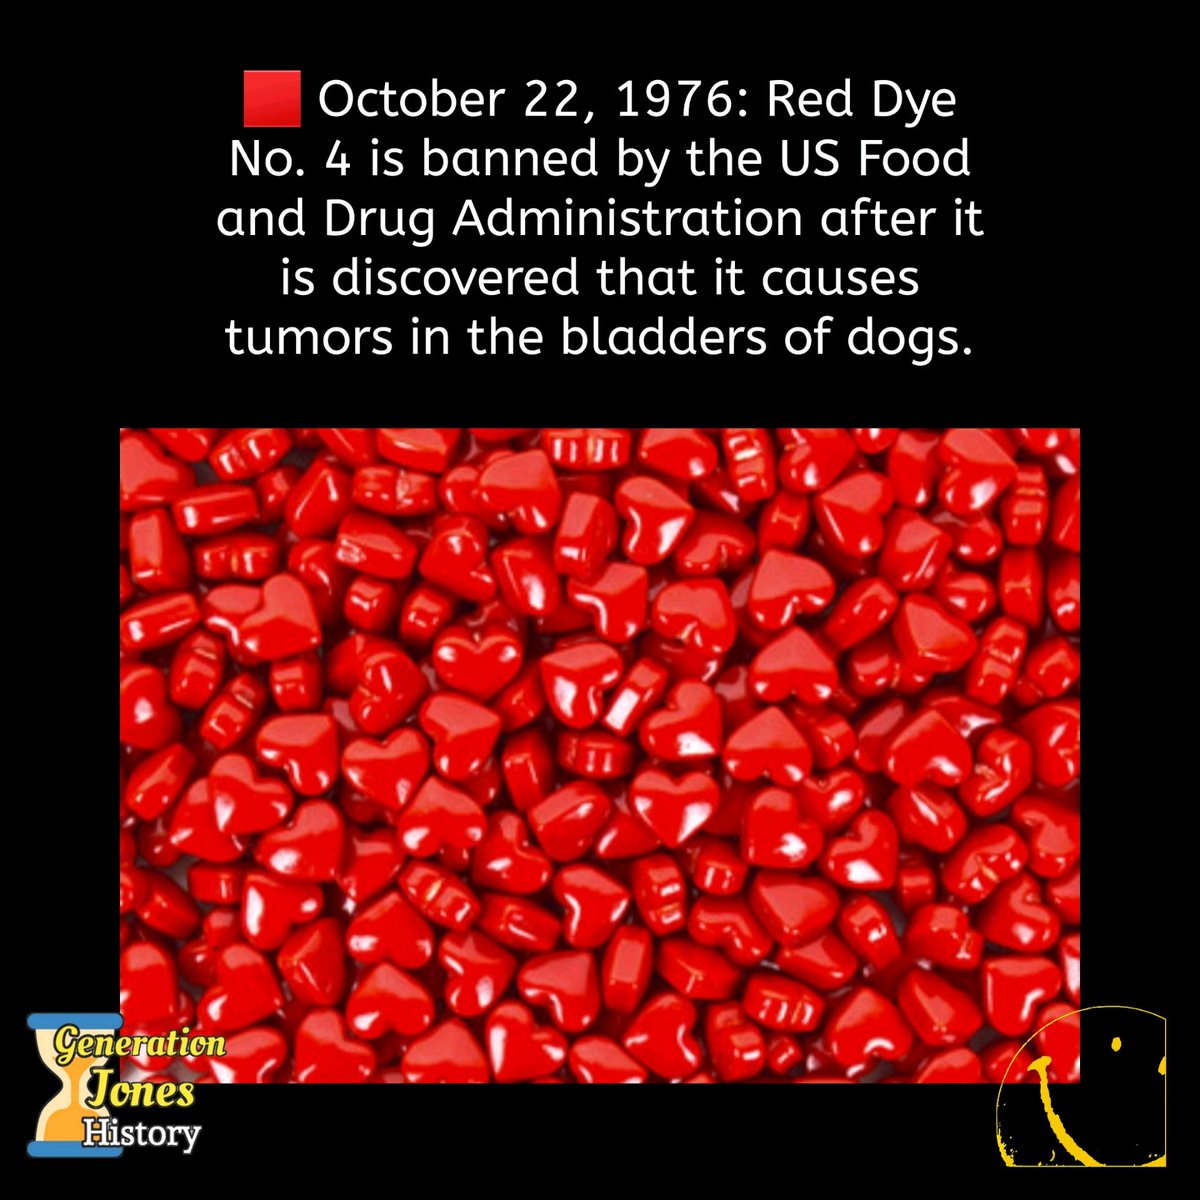 🟥 October 22, 1976:
#fda #reddyeno4 #red #foodcoloring #history #ushistory #1970s
#generationjones #generationx #babyboom